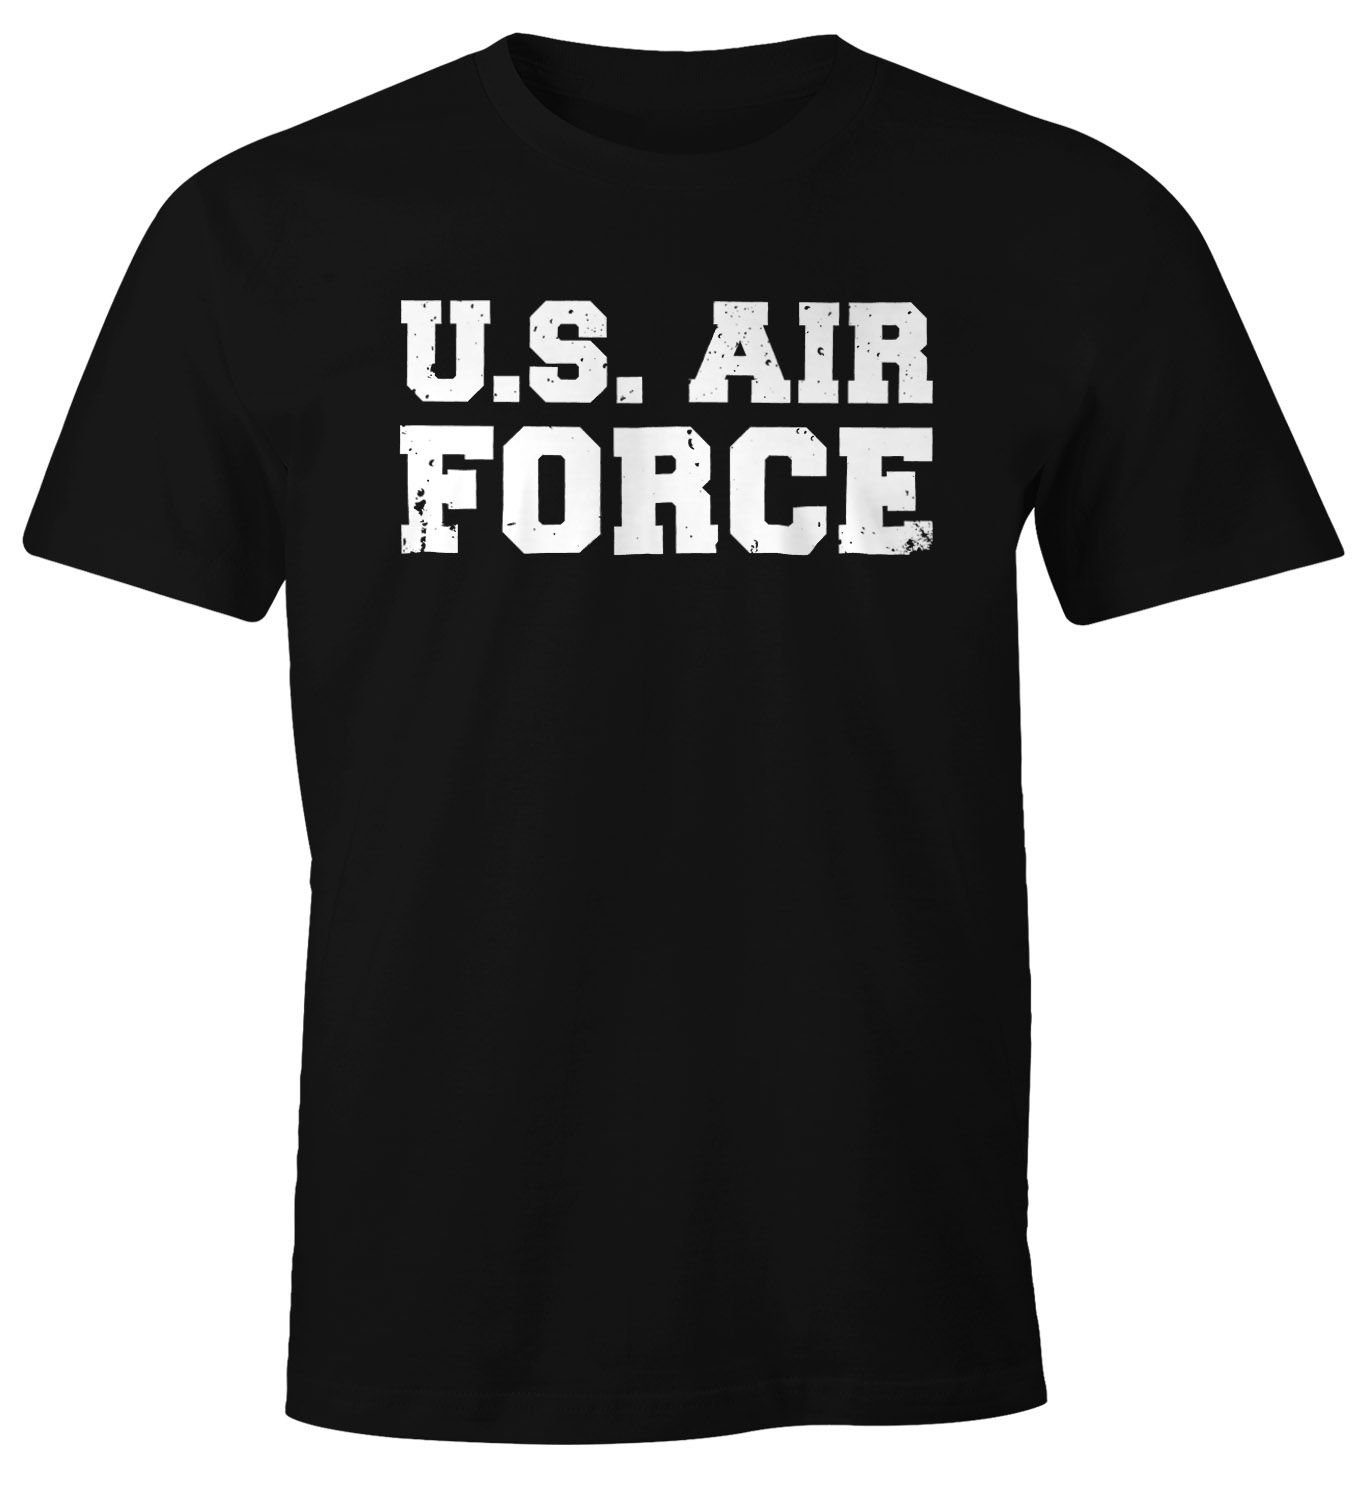 MoonWorks Print-Shirt mit Herren Fun-Shirt Karneval Air Kostüm U.S. Moonworks® Fasching Verkleidung Force Print T-Shirt